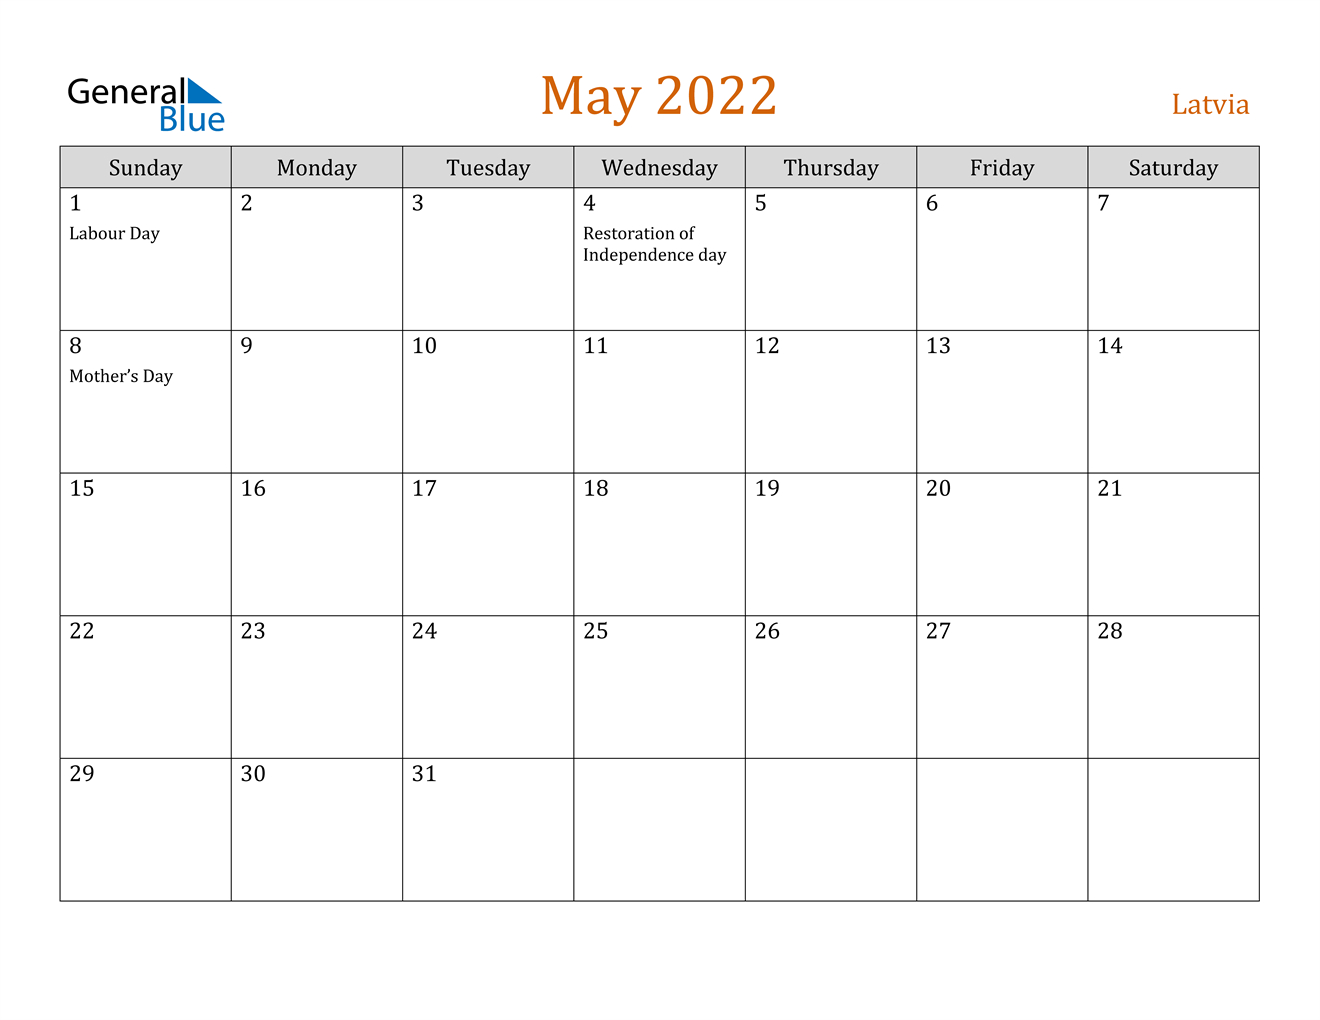 May 2022 Calendar - Latvia